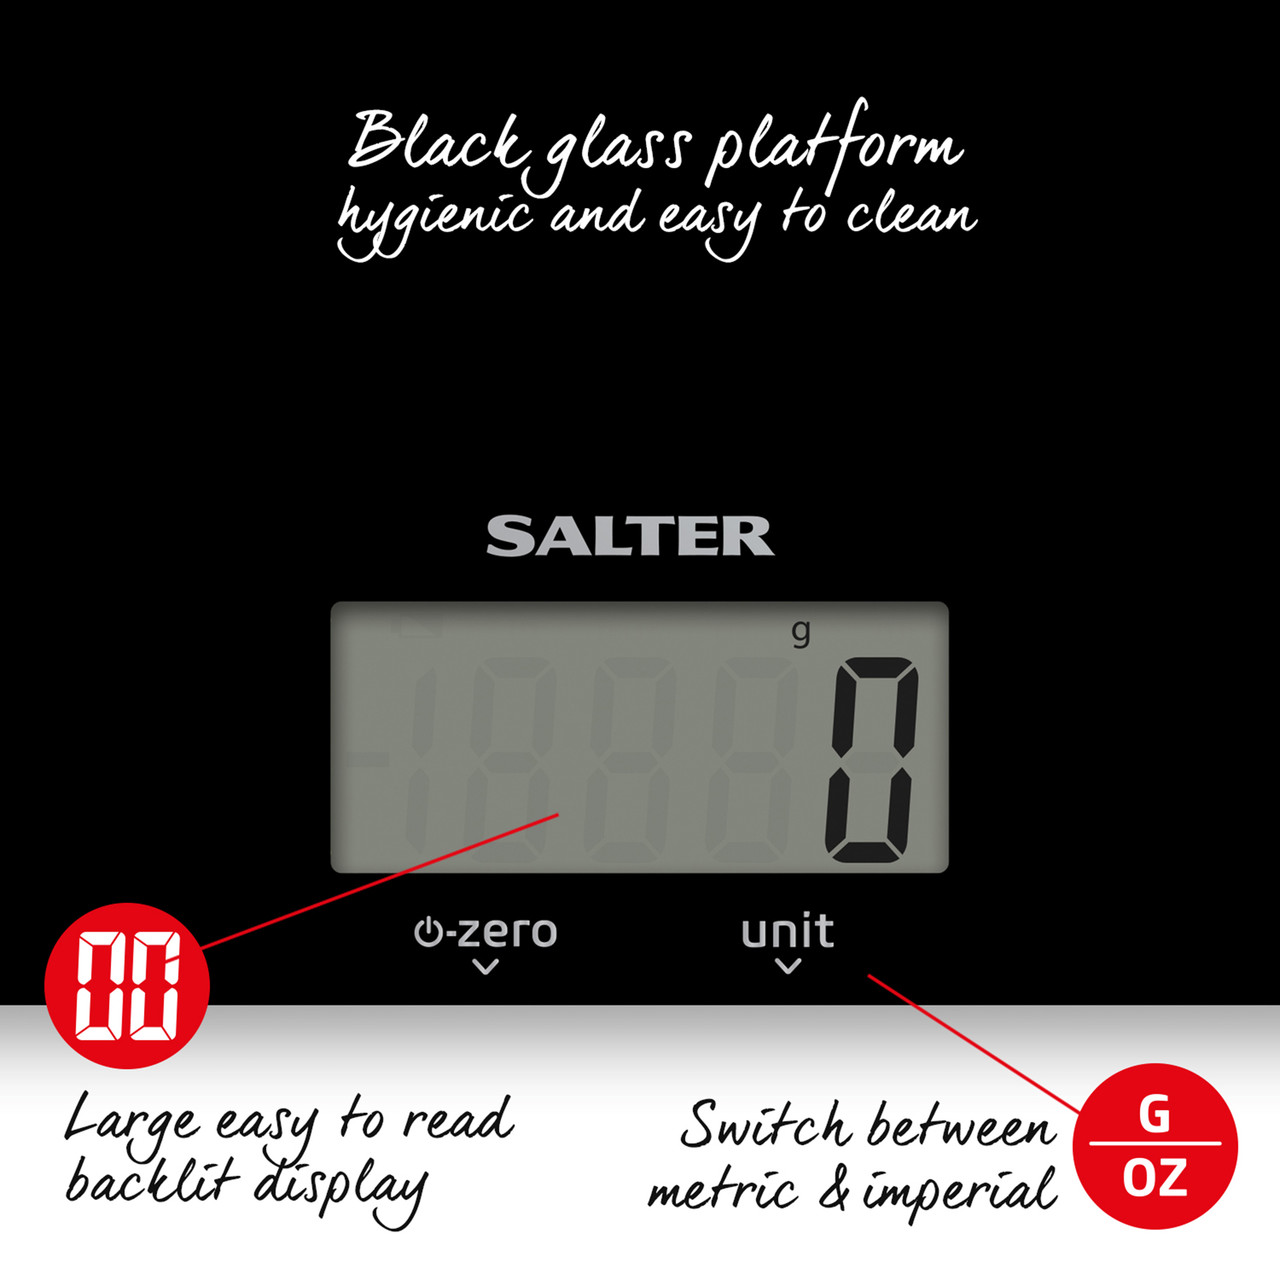 Salter Digital Curve Glass Kitchen Scale Max 5 kg – White - Anasia Shop